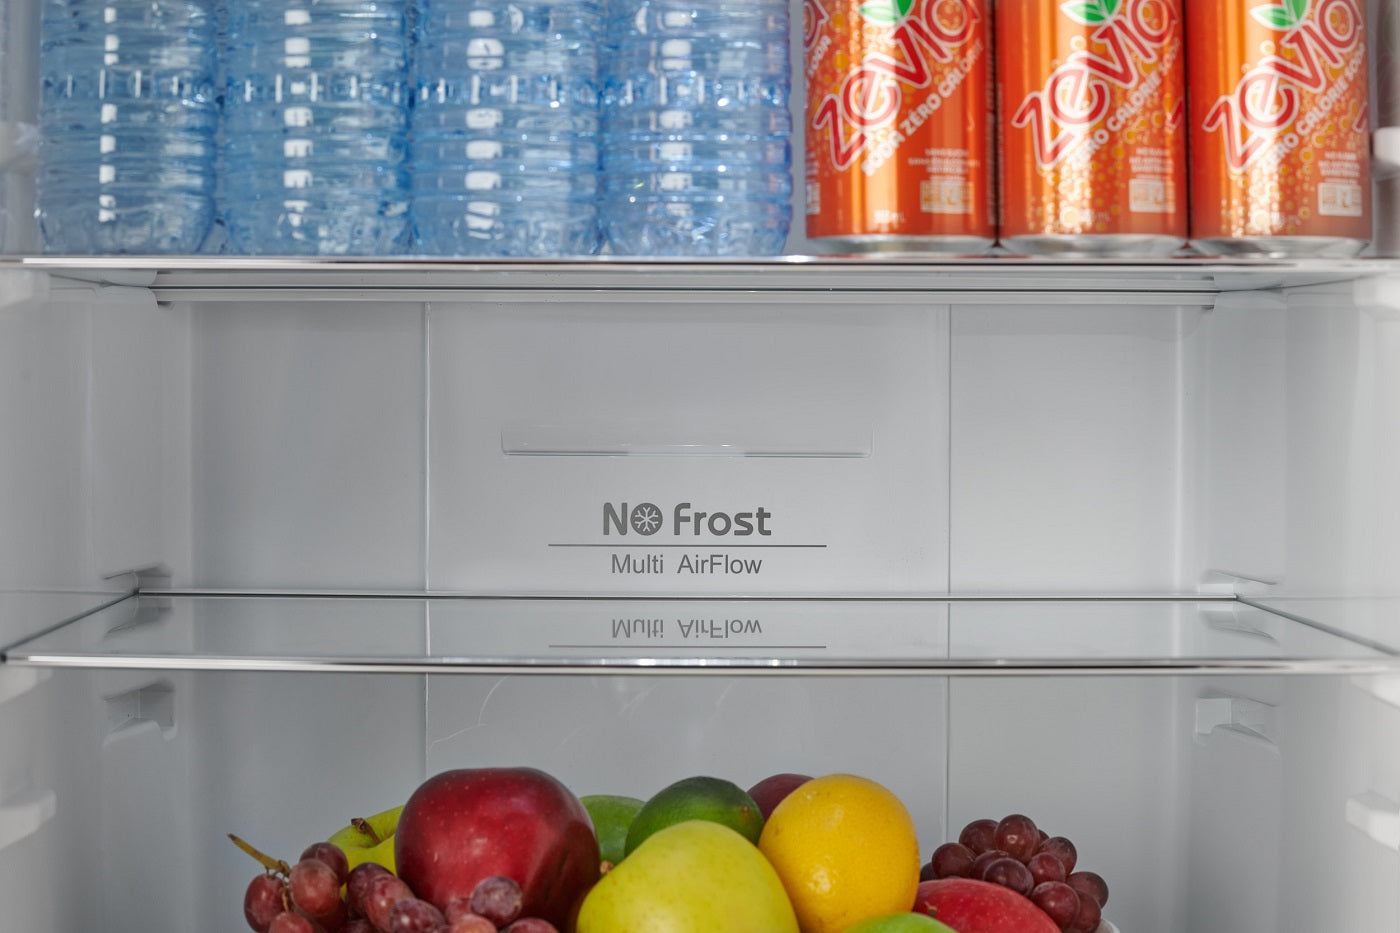 iio 11 cu. ft. Retro Frost Free Bottom Freezer Refrigerator in